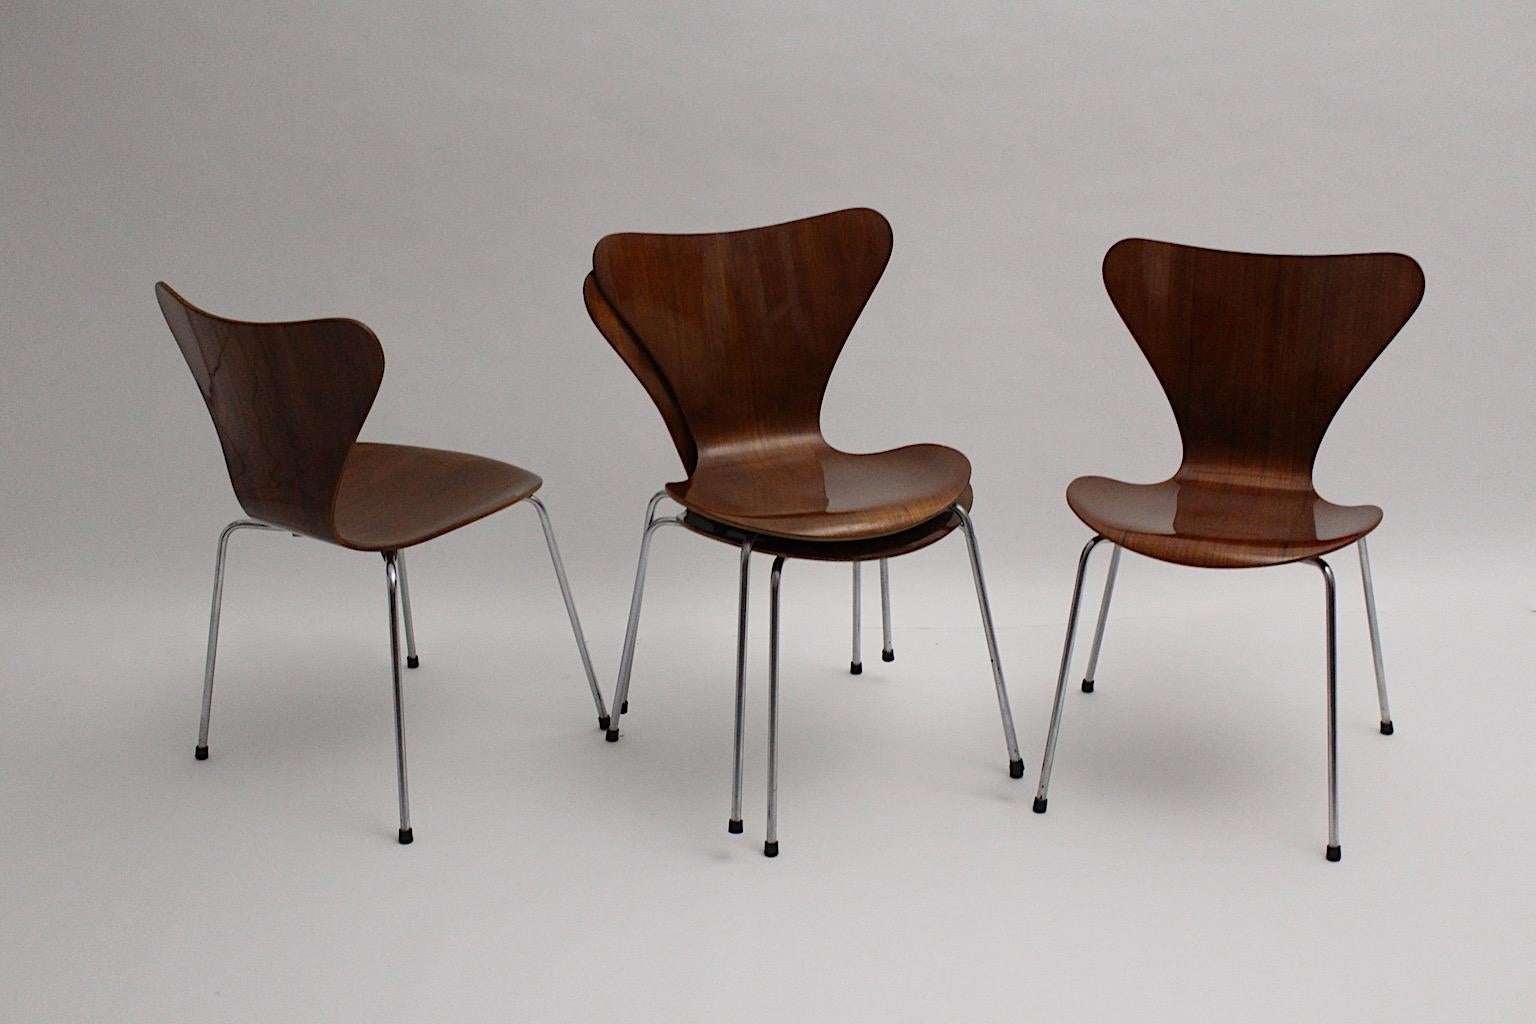 European Modernist Vintage Brown Four Dining Chairs Arne Jacobsen 3107 circa 1955 Denmark For Sale